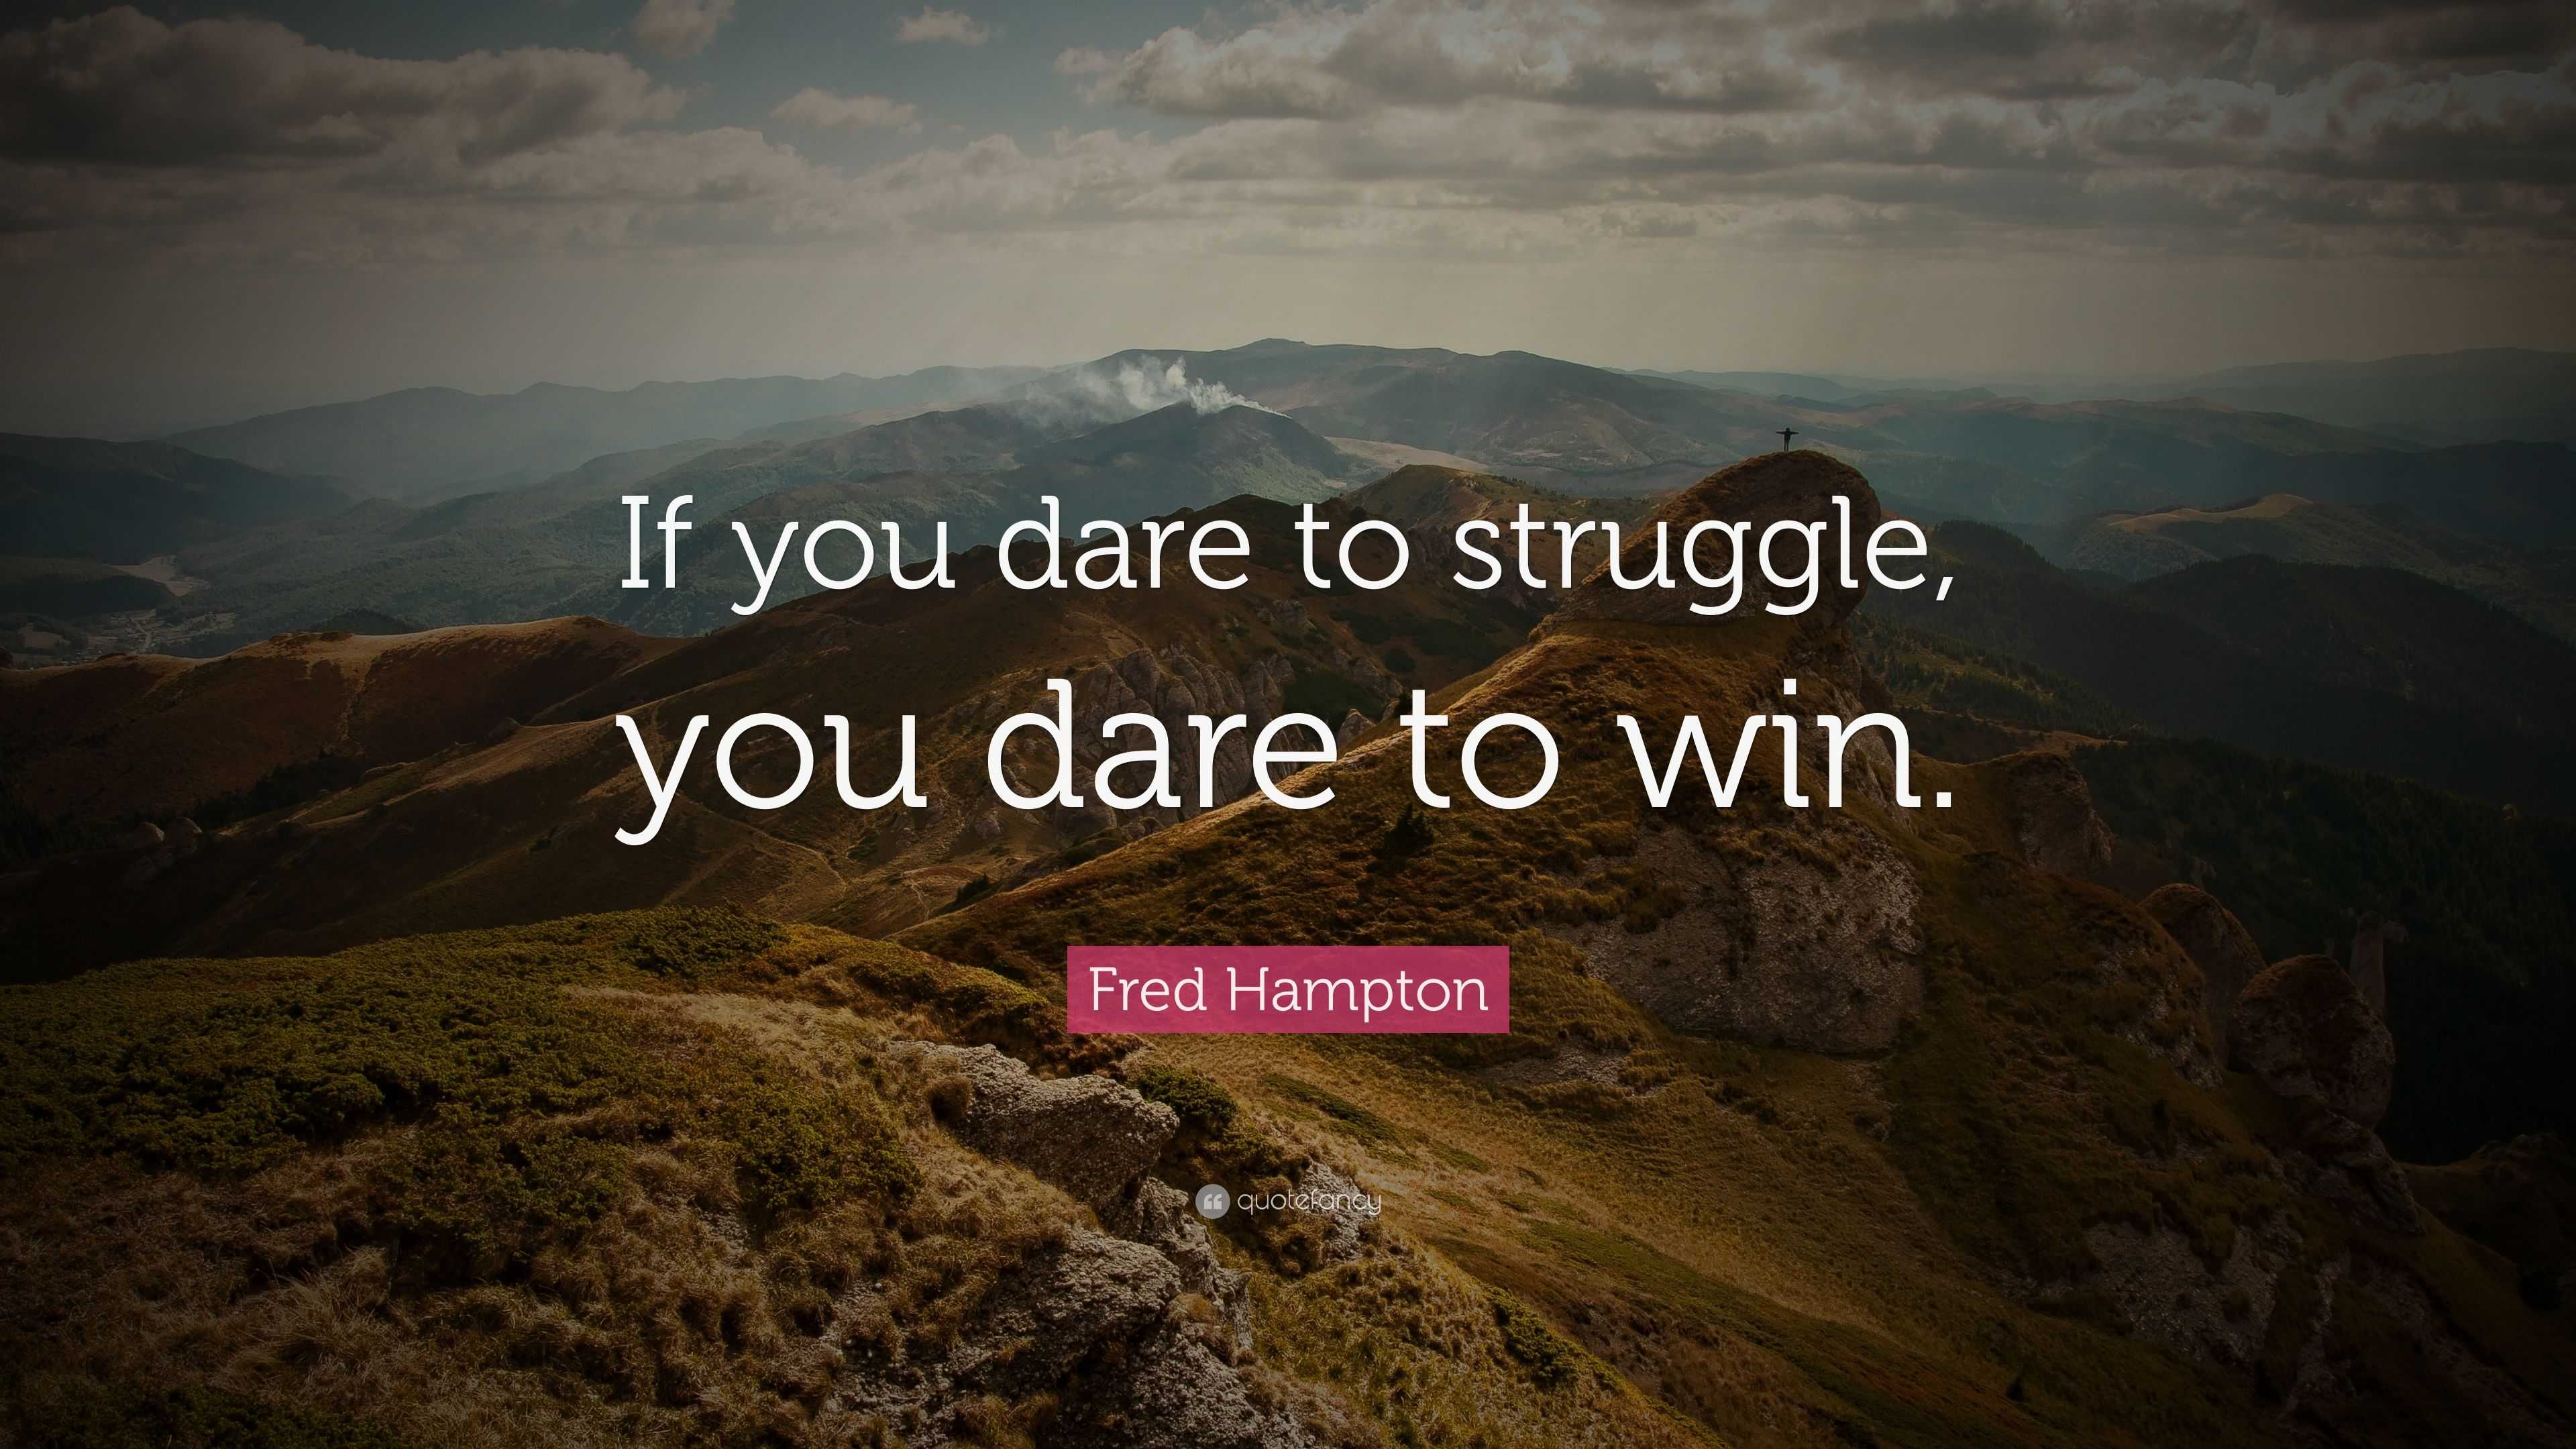 Fred Hampton Quote: “If you dare to struggle, you dare to win.”